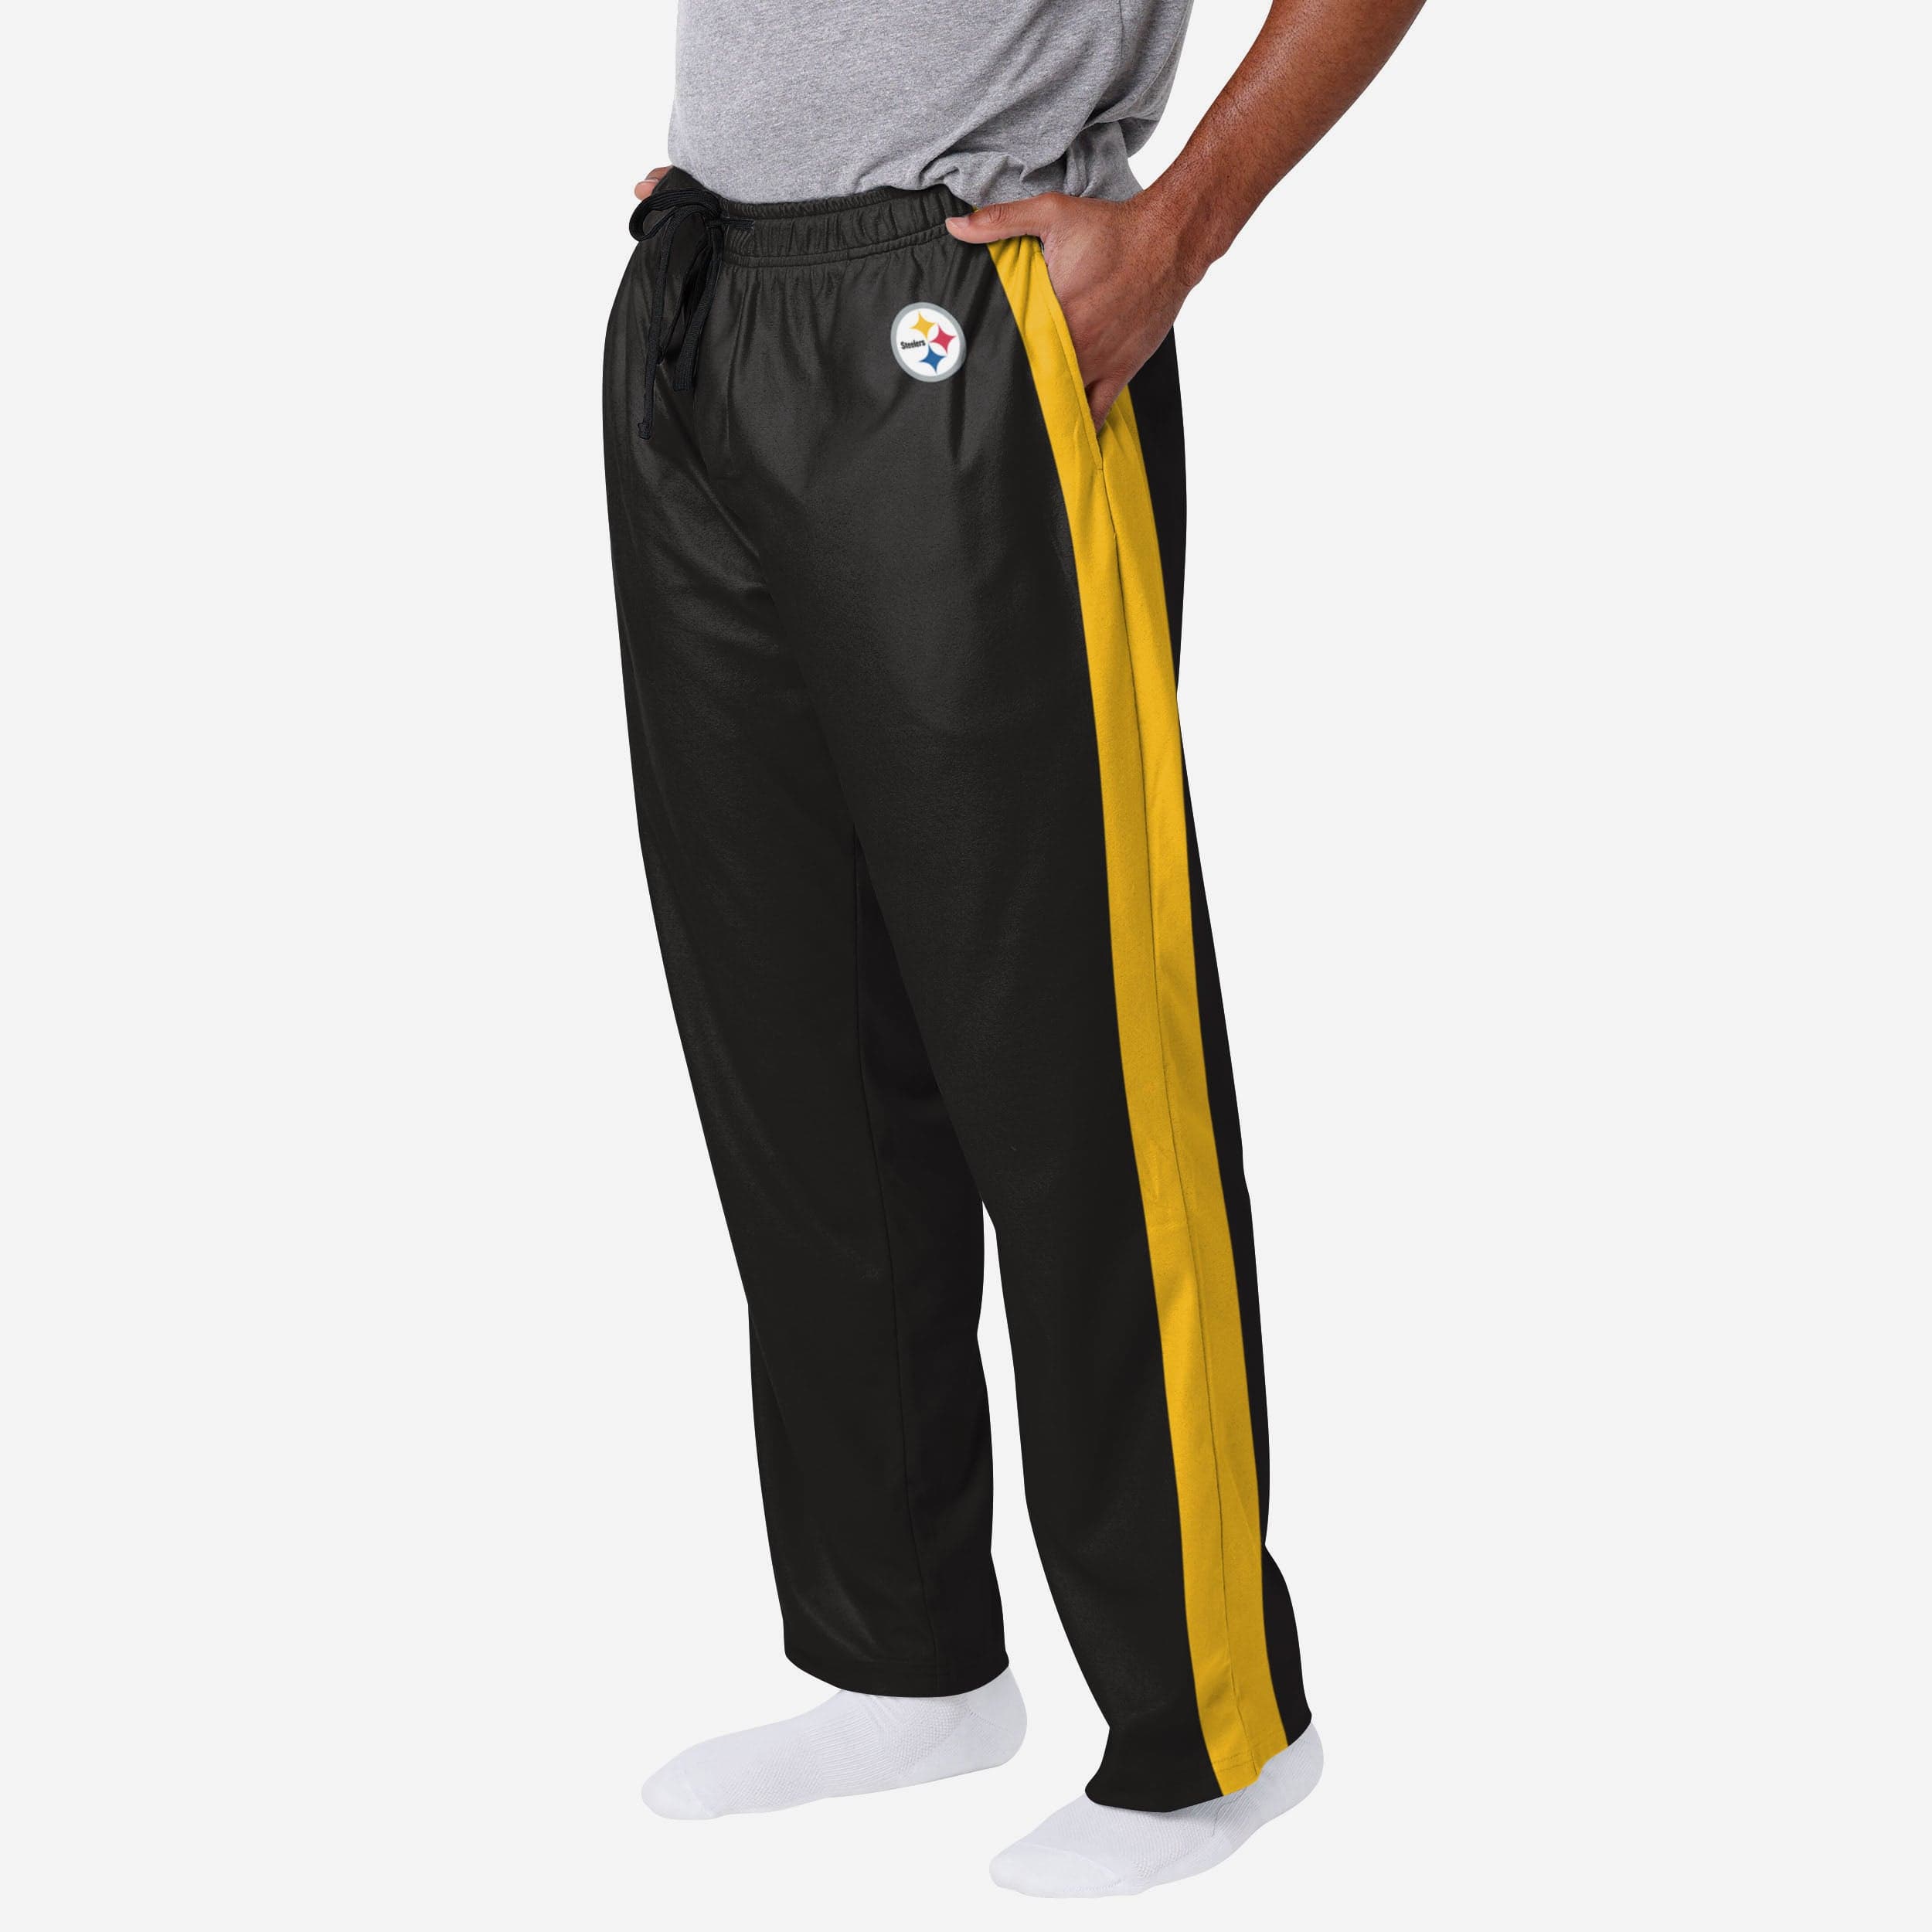 FOCO Pittsburgh Steelers Buffalo Check Lounge Pants, Mens Size: M